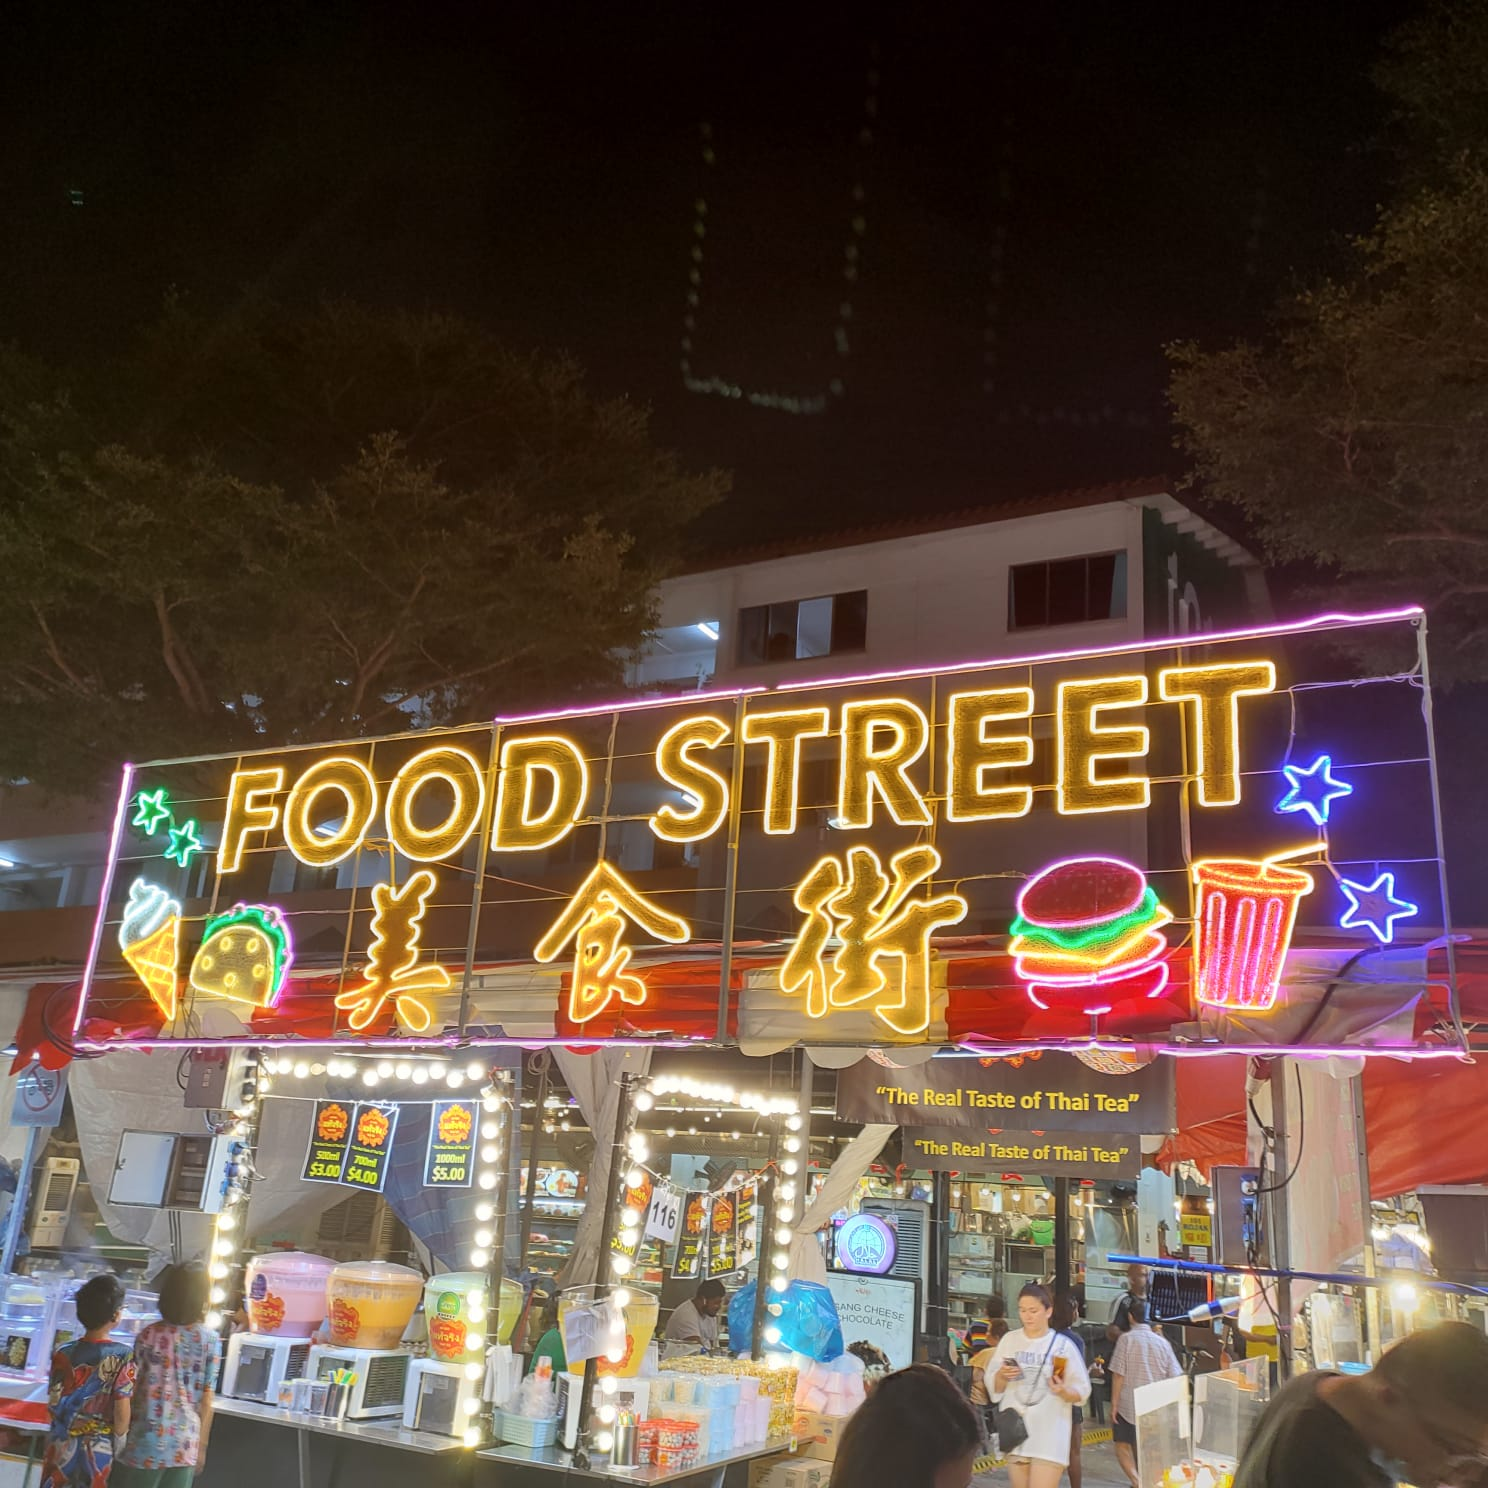 Pasar Malams in Singapore Yishun Night Market